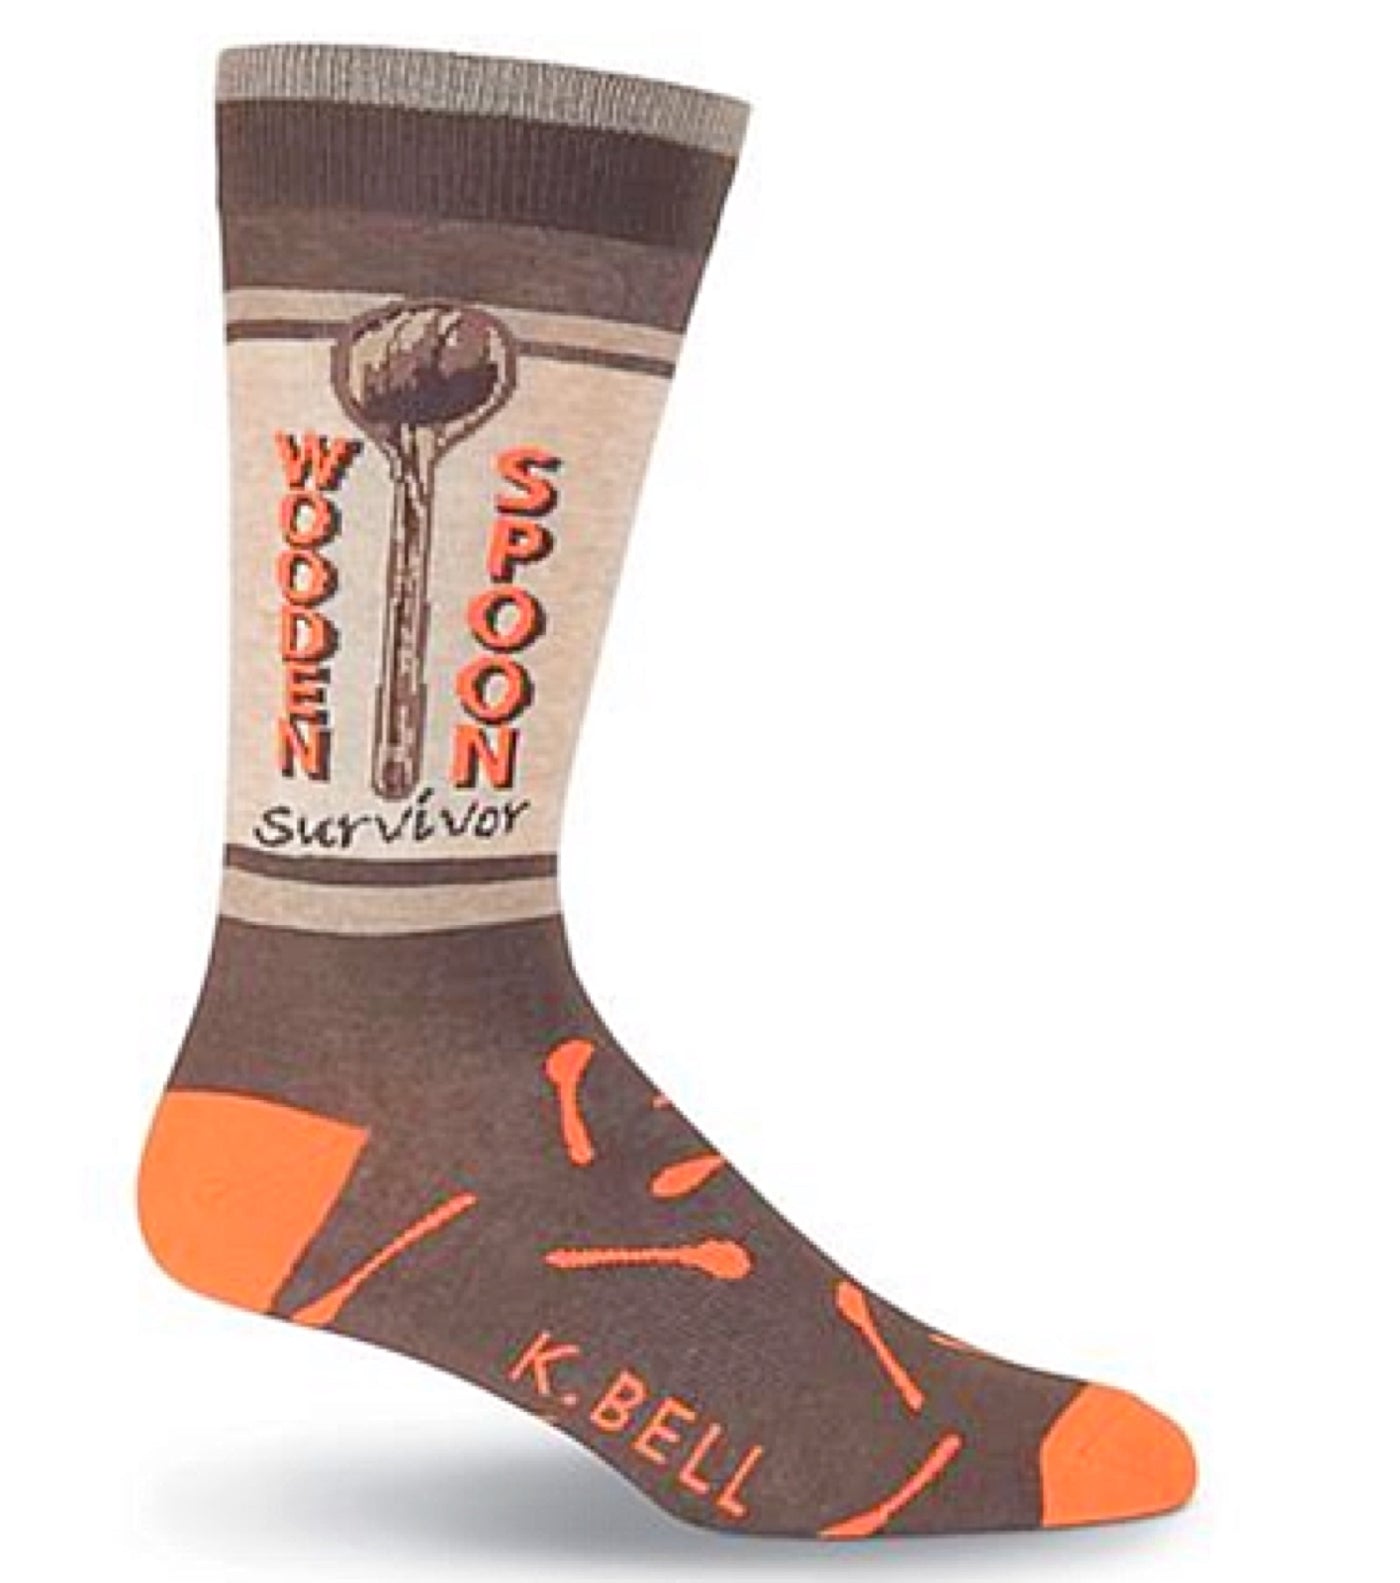 K. BELL Brand Men’s WOODEN SPOON SURVIVOR Socks